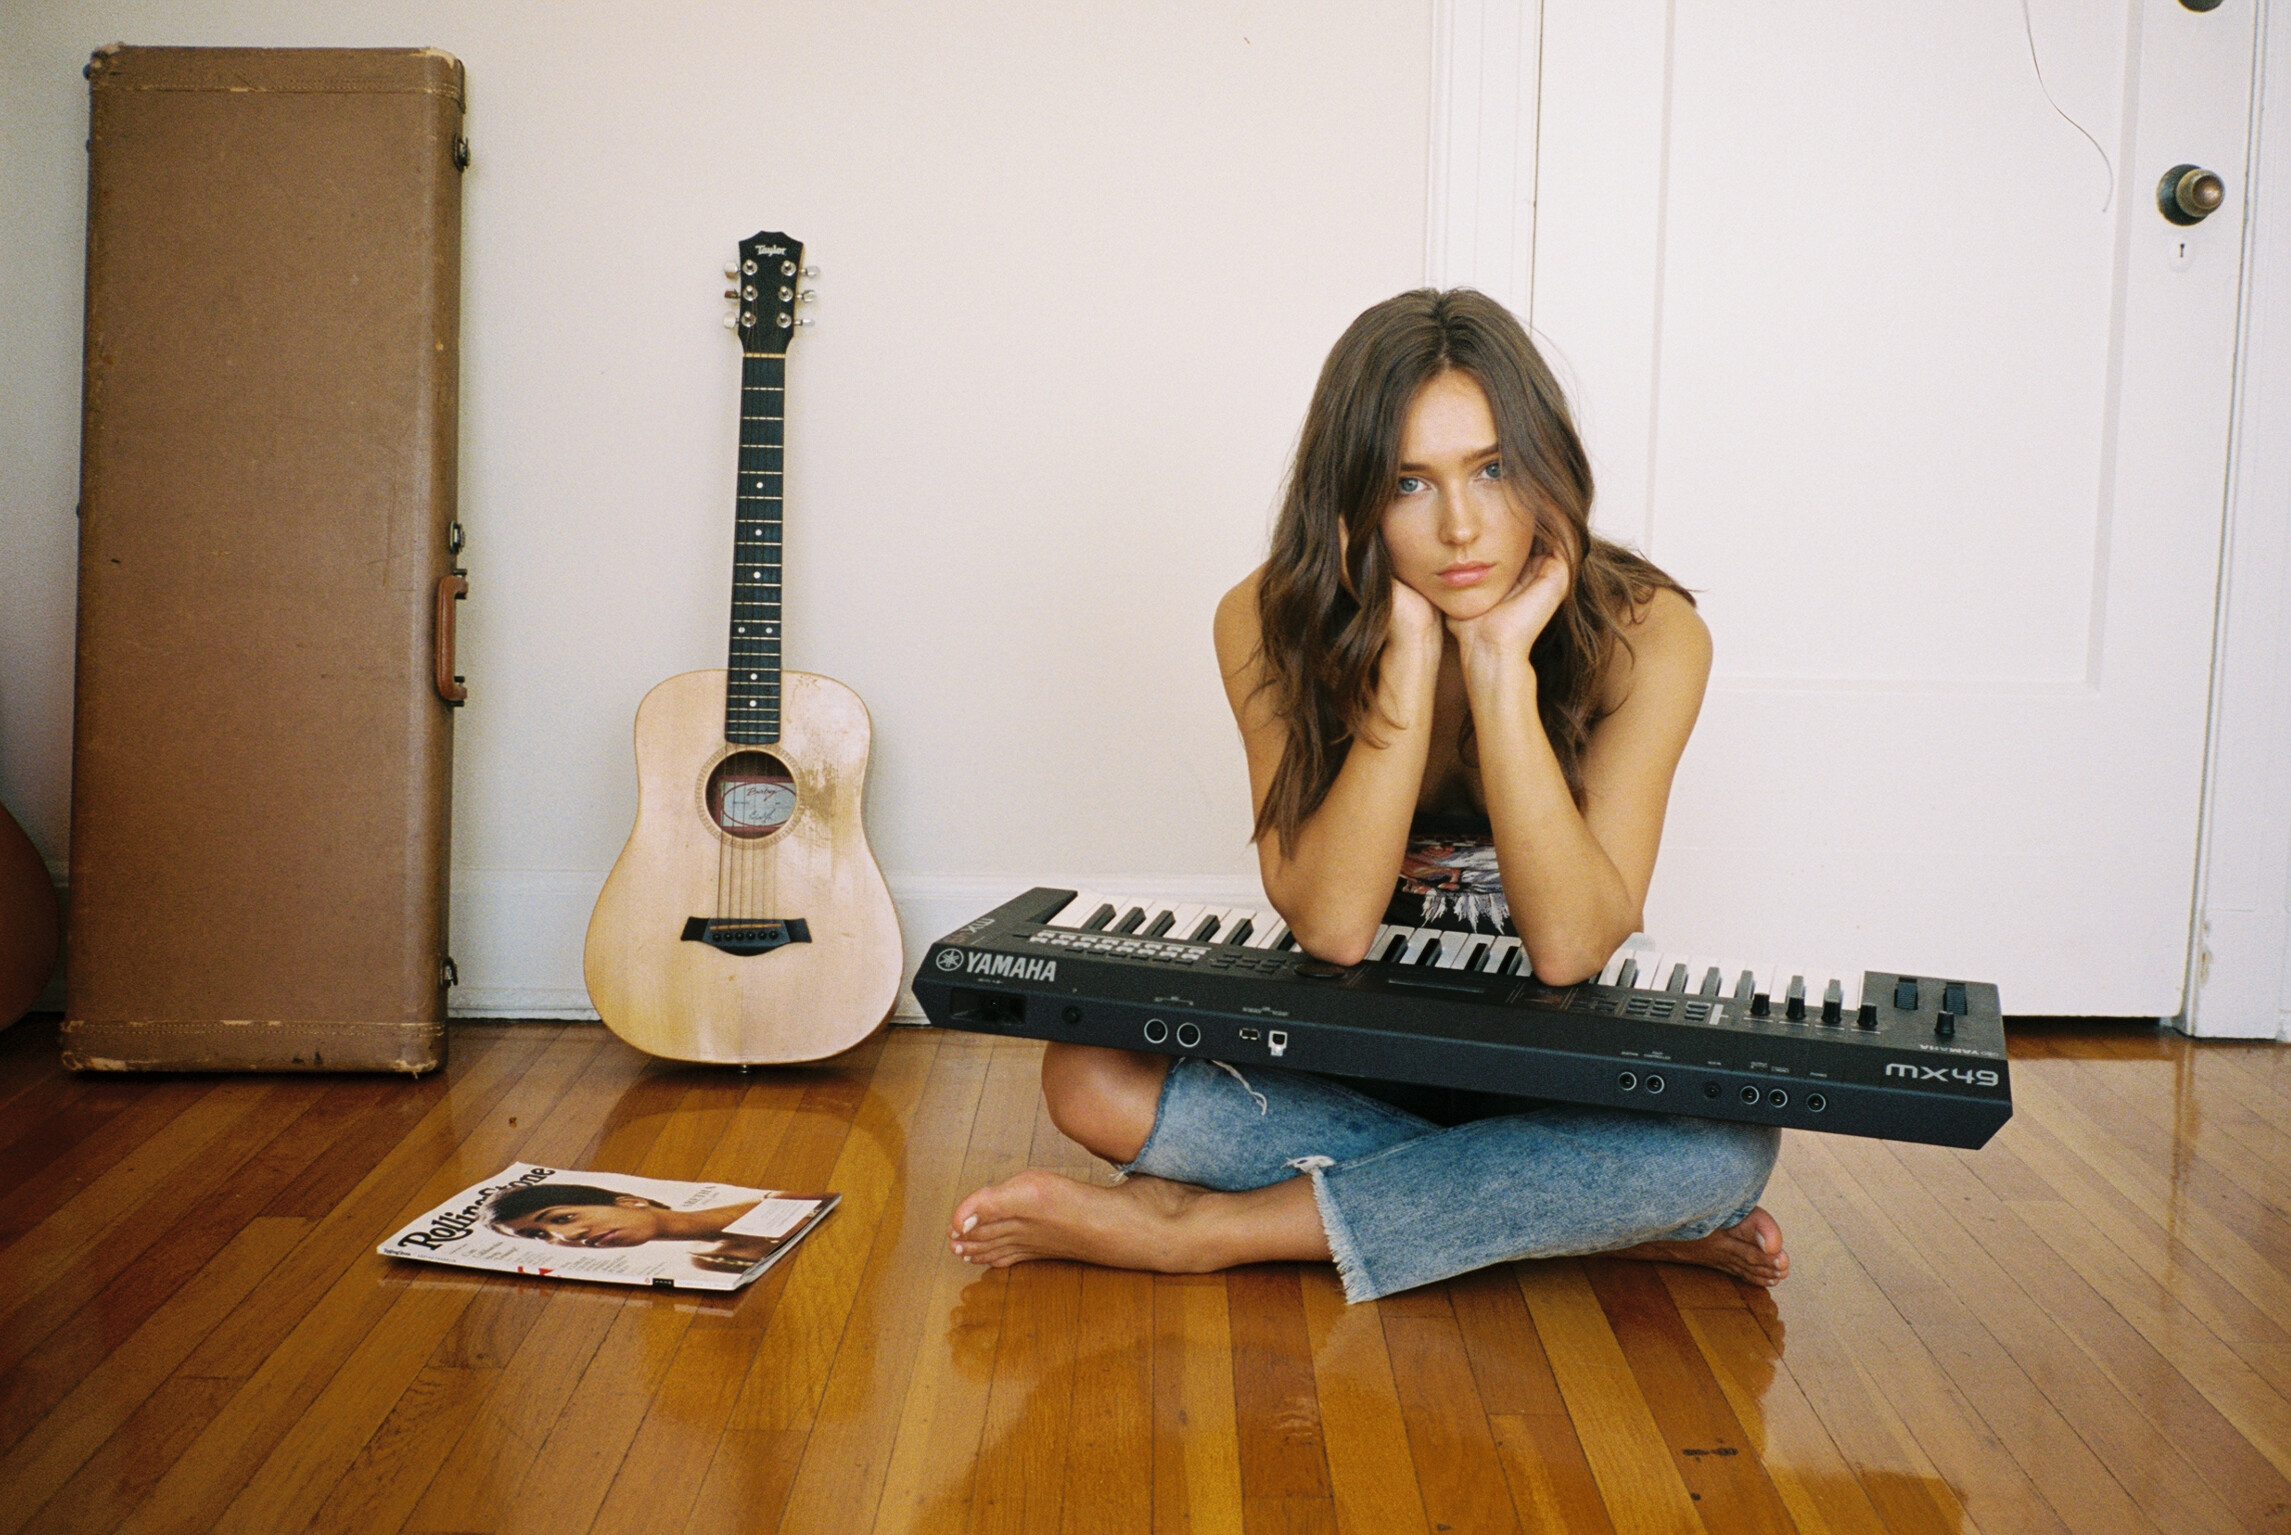 Women Model Brunette Keyboards Guitar On The Floor Resting Head Blue Eyes Grainy Feet Wooden Floor 2291x1535